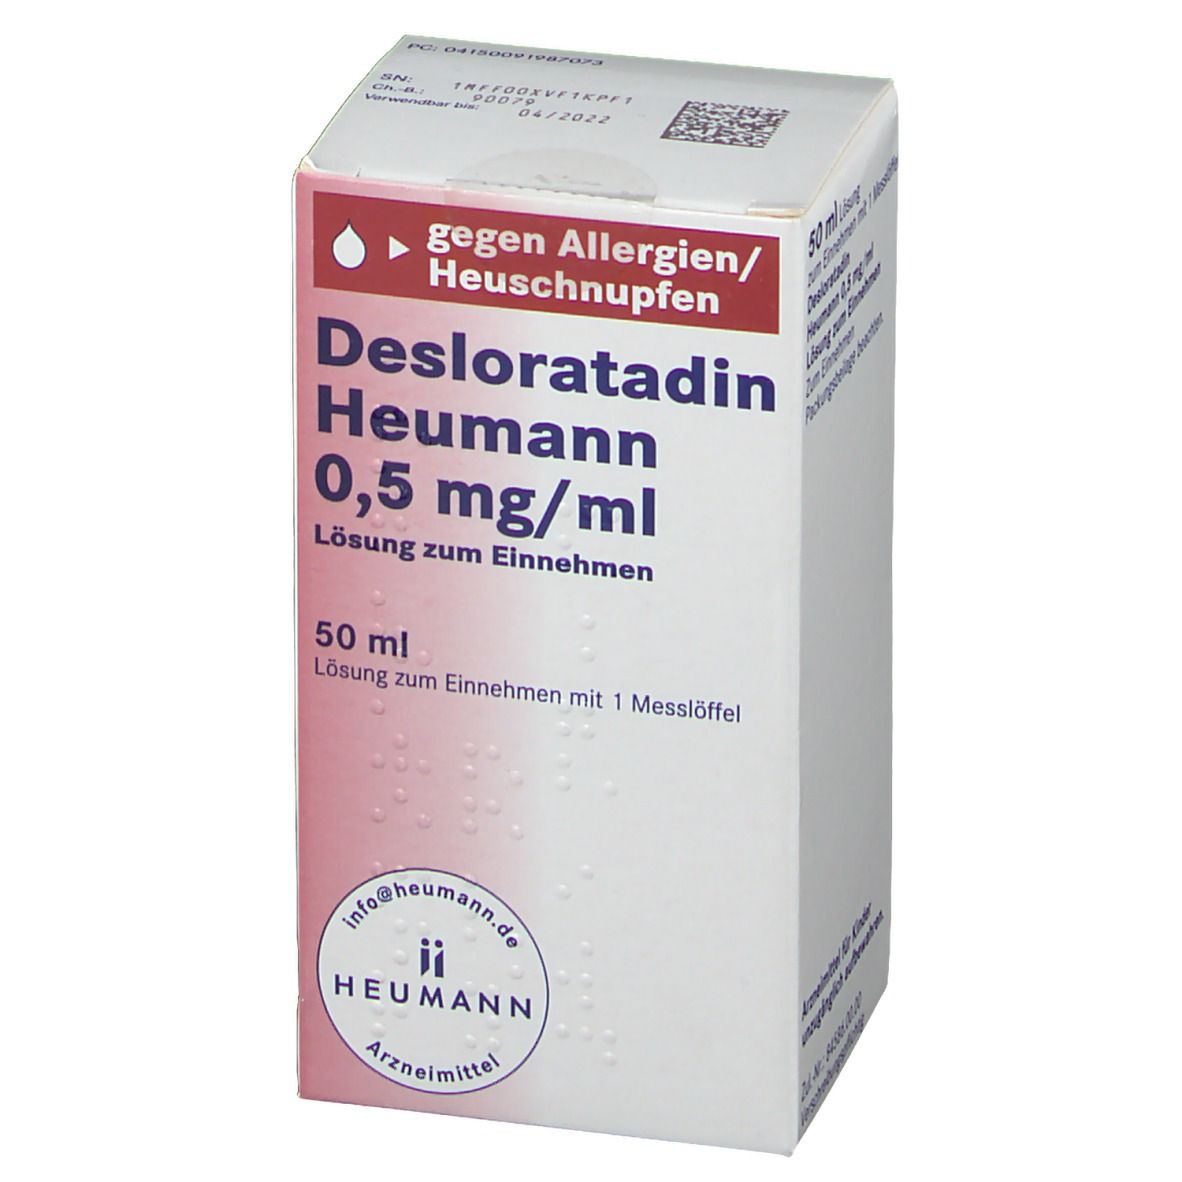 Desloratadin Heumann 0,5 mg/ml